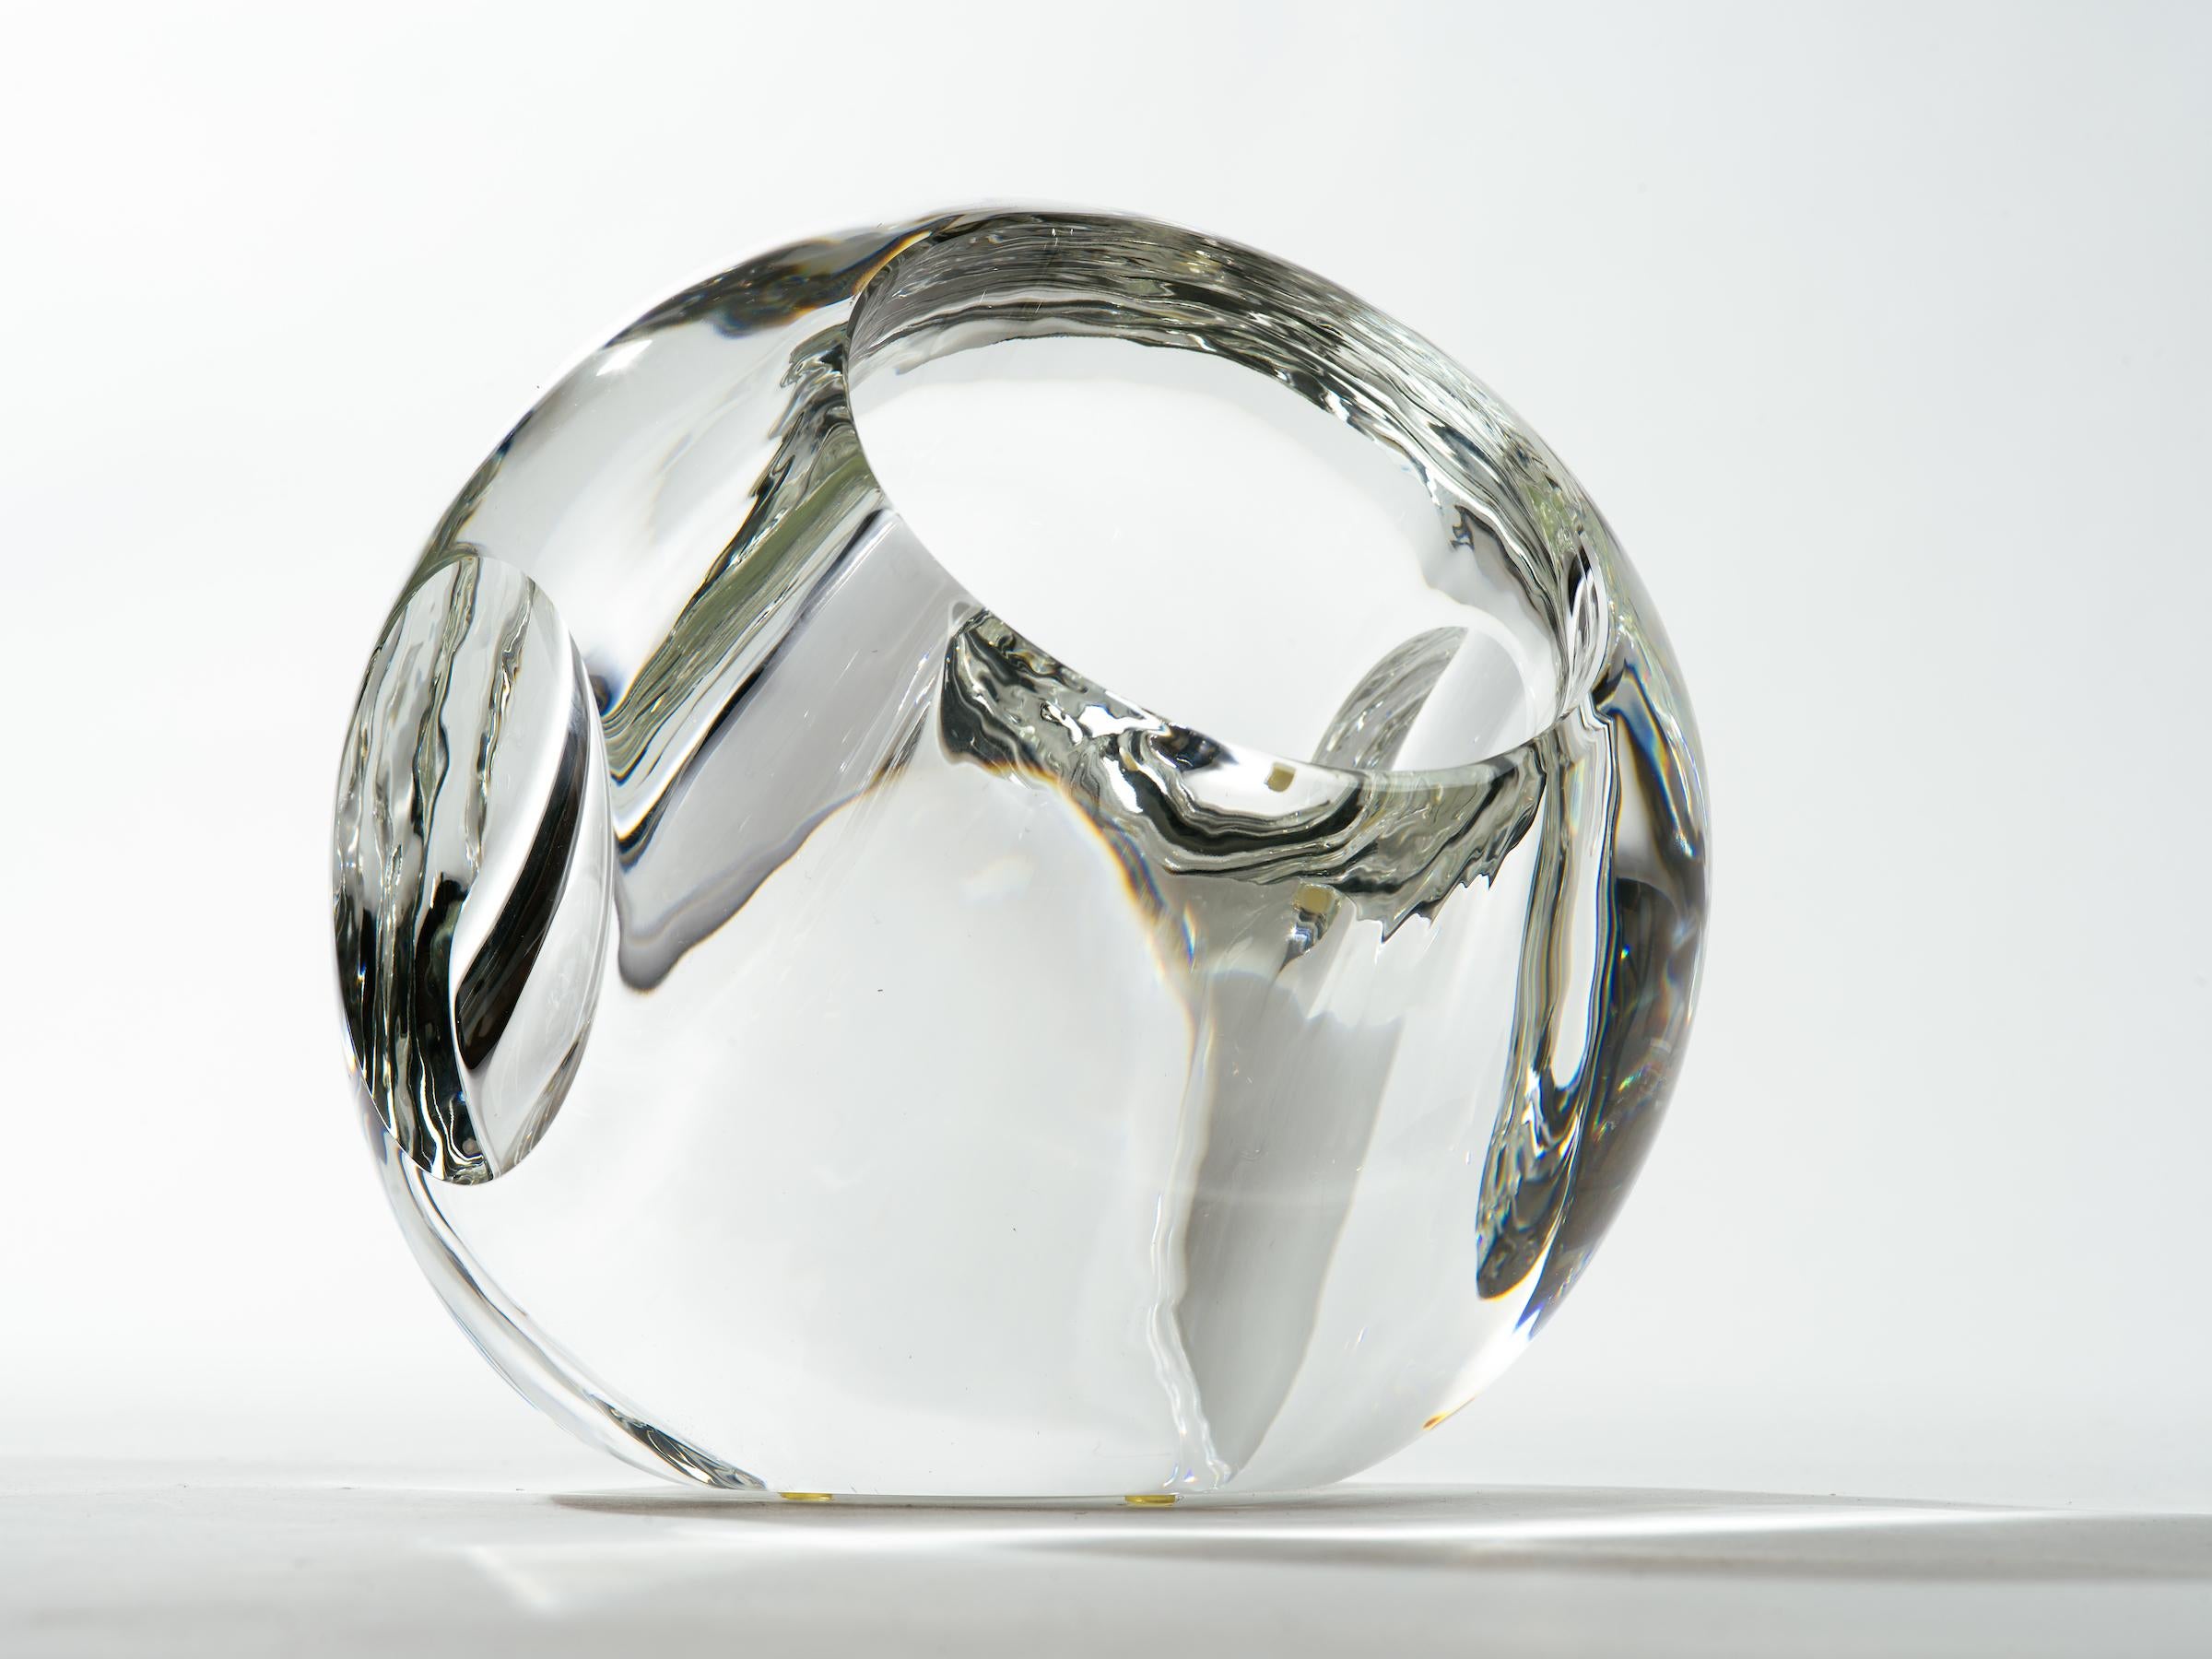 Art Glass Op Art Engraved Convex Glass Sphere Sculpture Vase